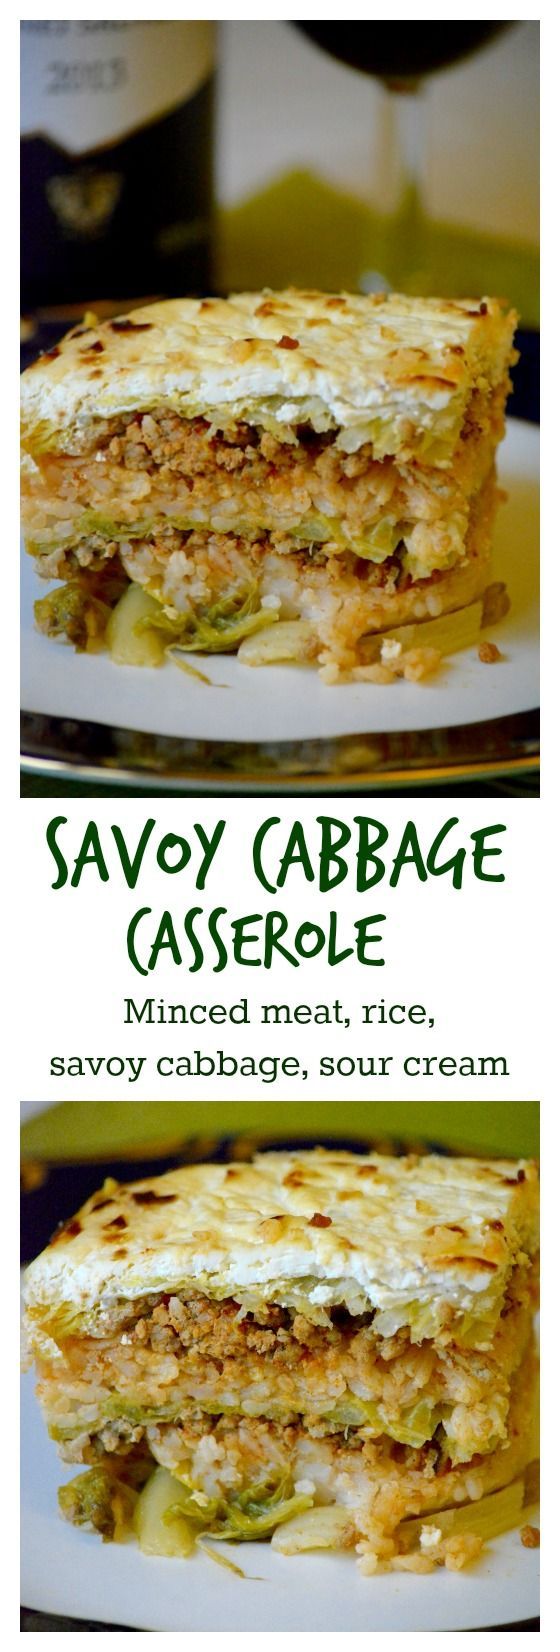 Hungarian layered savoy cabbage casserole, Rakott kelk?poszta recipe -   25 savoy cabbage recipes ideas